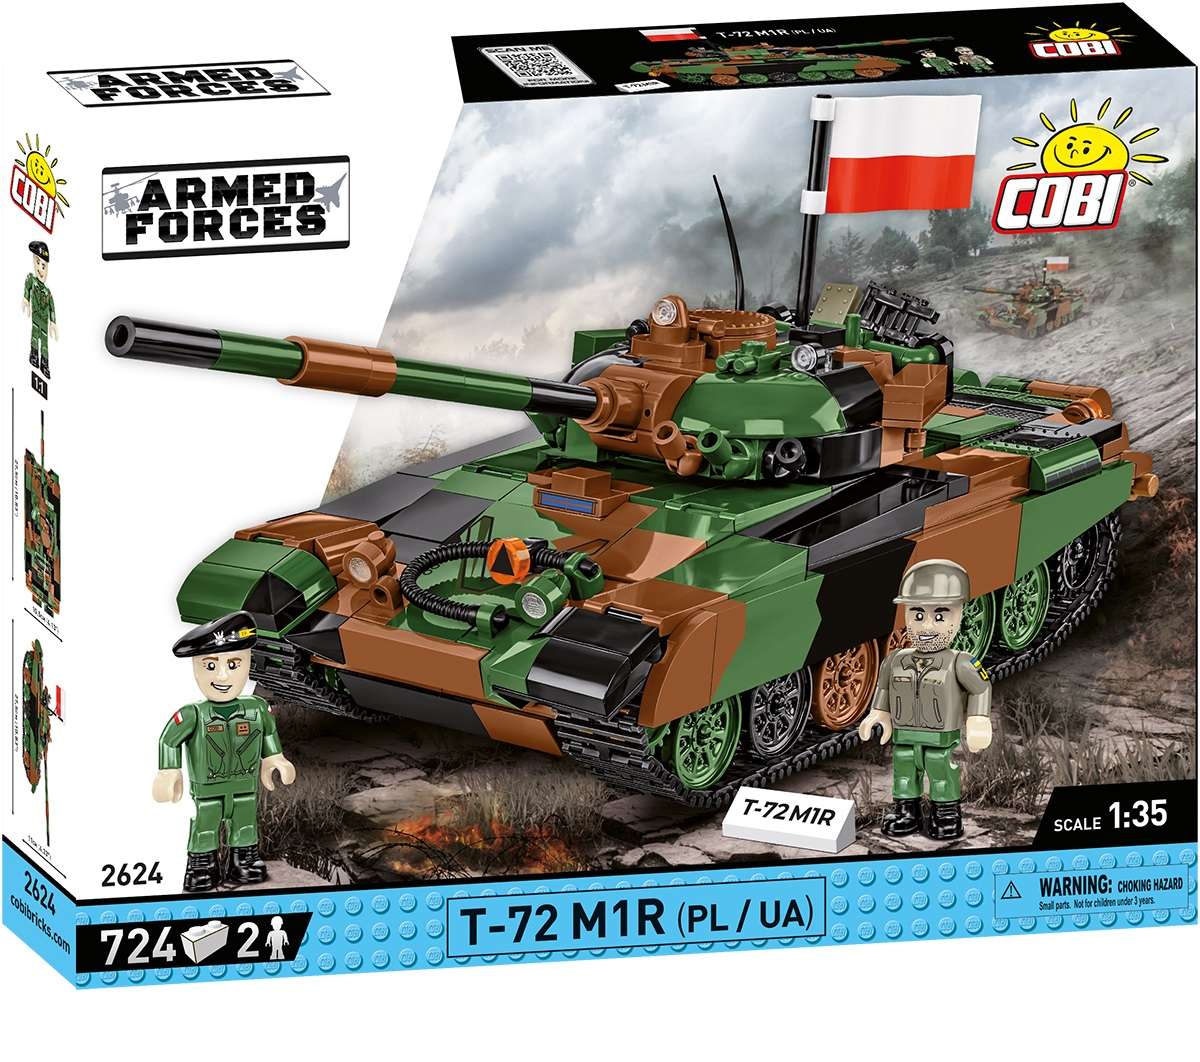 Cobi Armed Forces T-72 M1R Polish Army 2624